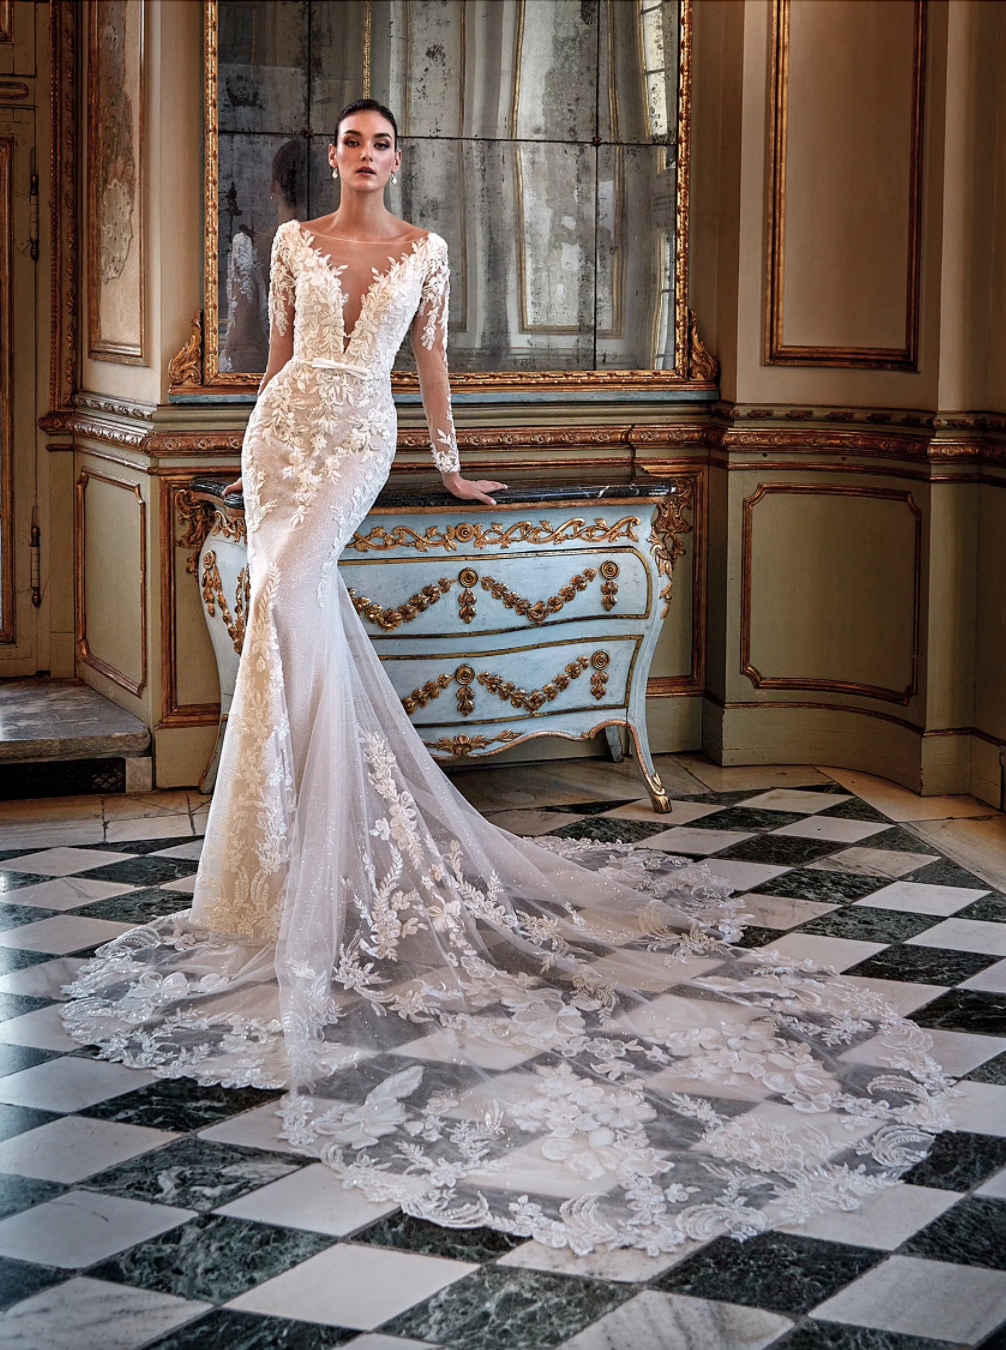 Eirian Wedding Dress - Wedding Atelier NYC - Pronovias - New York